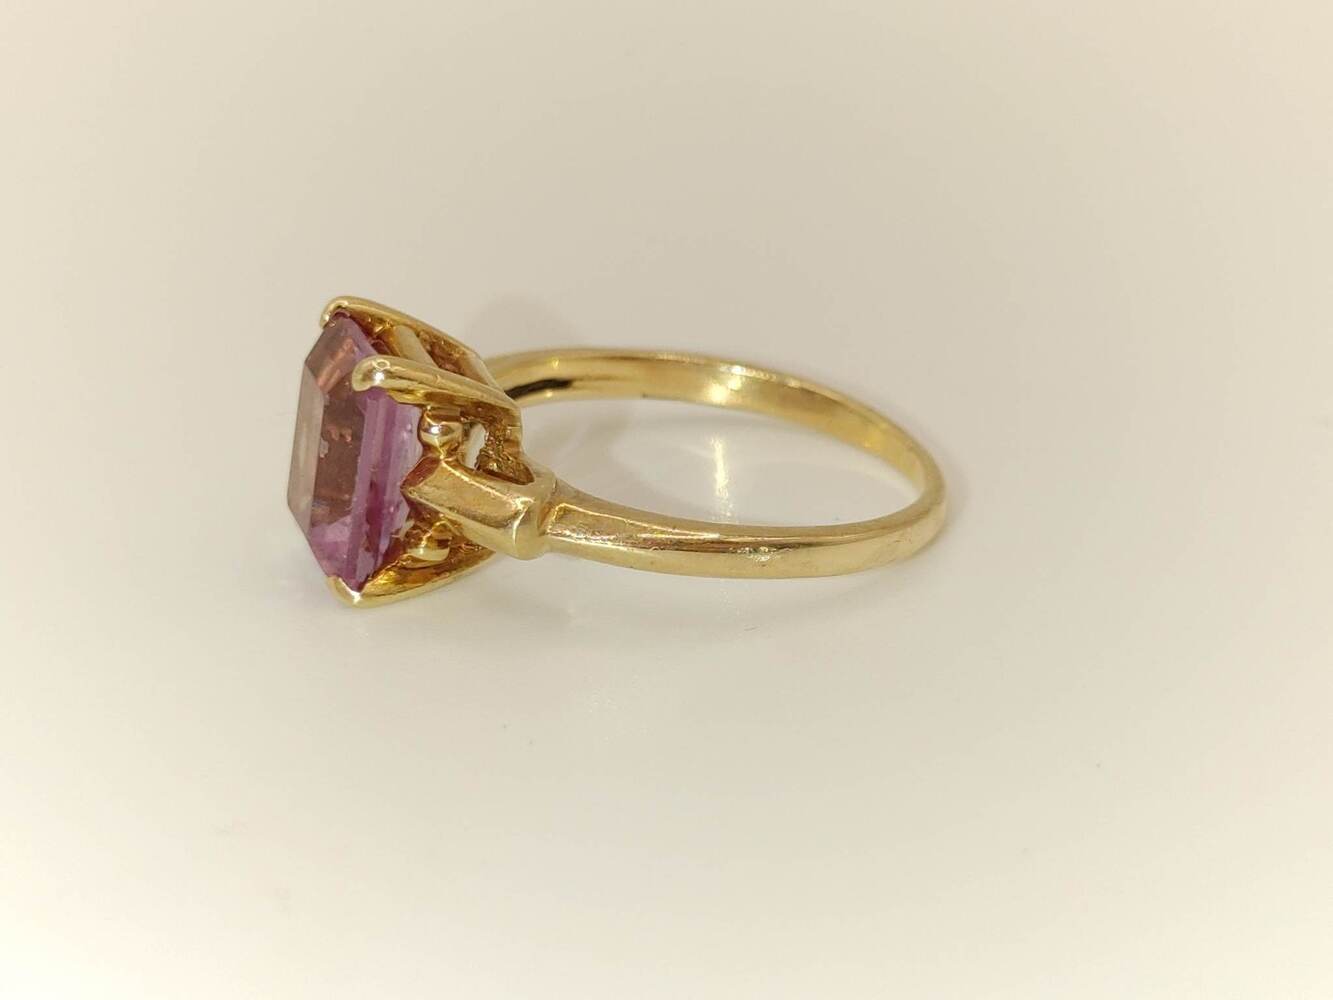 Lady's 10 Karat Yellow Gold Ring with Purple Stone